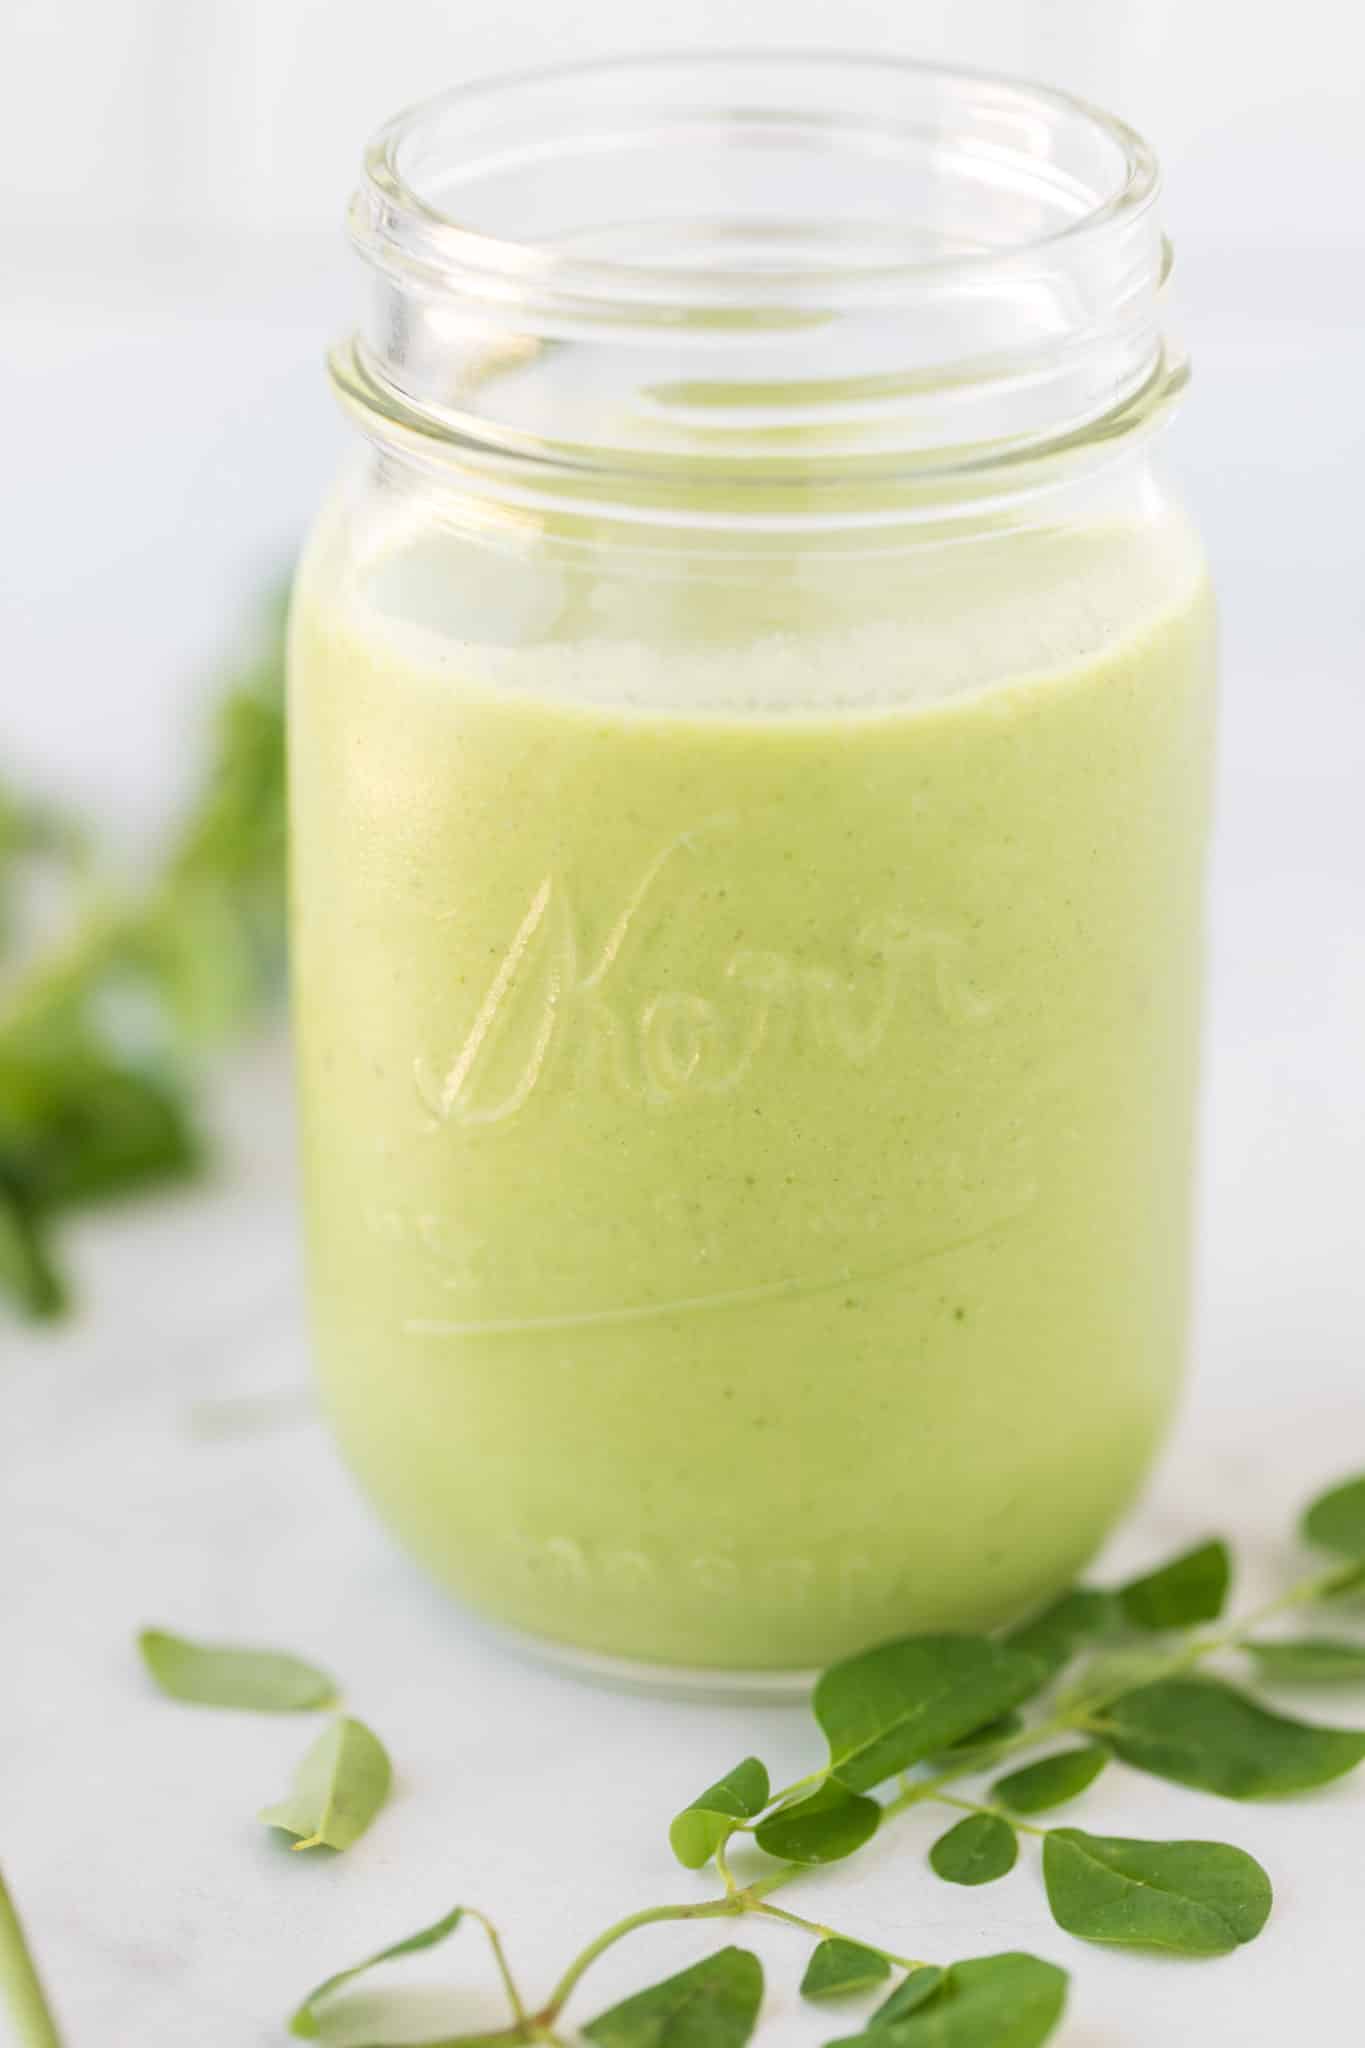 Moringa smoothie in a large glass jar.